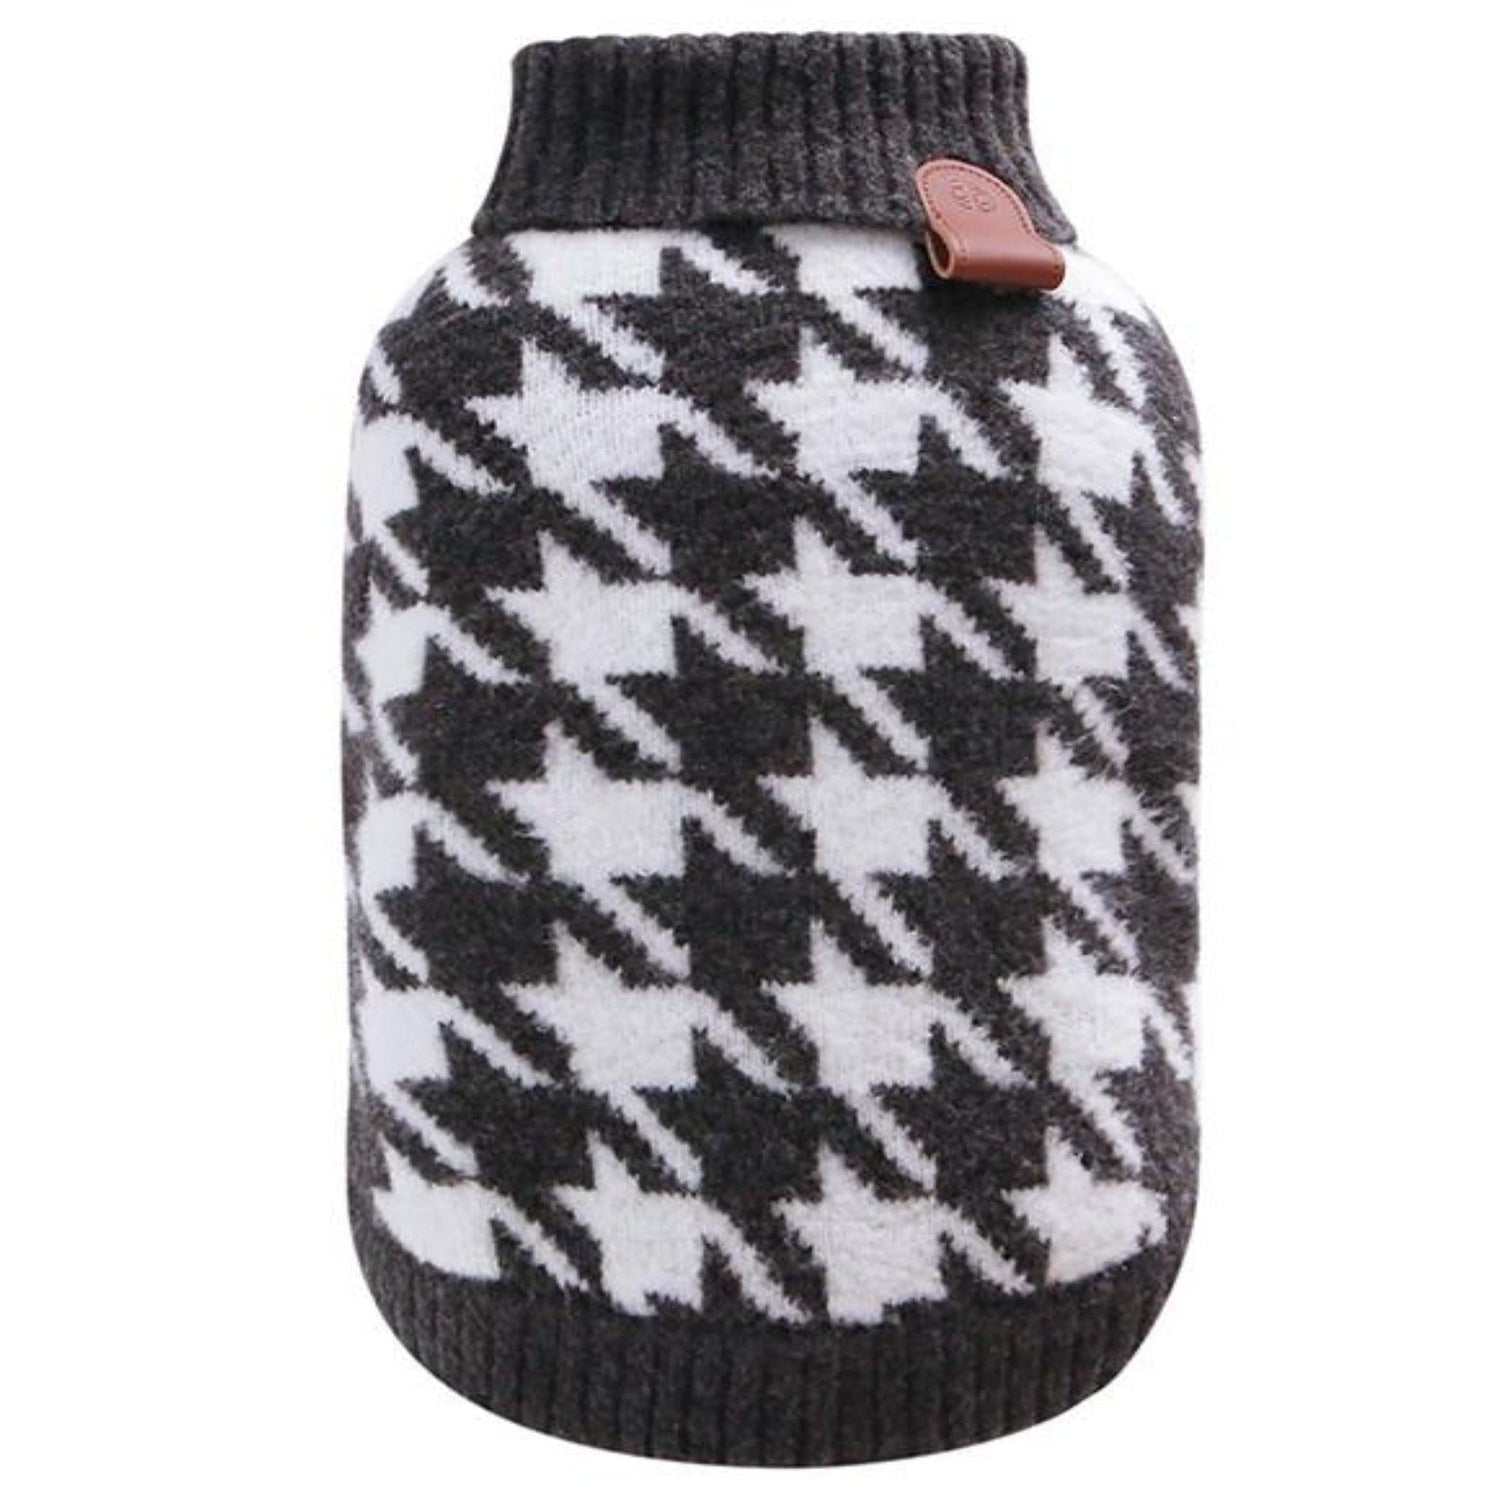 Premium Wool Sweater Dog Jumper